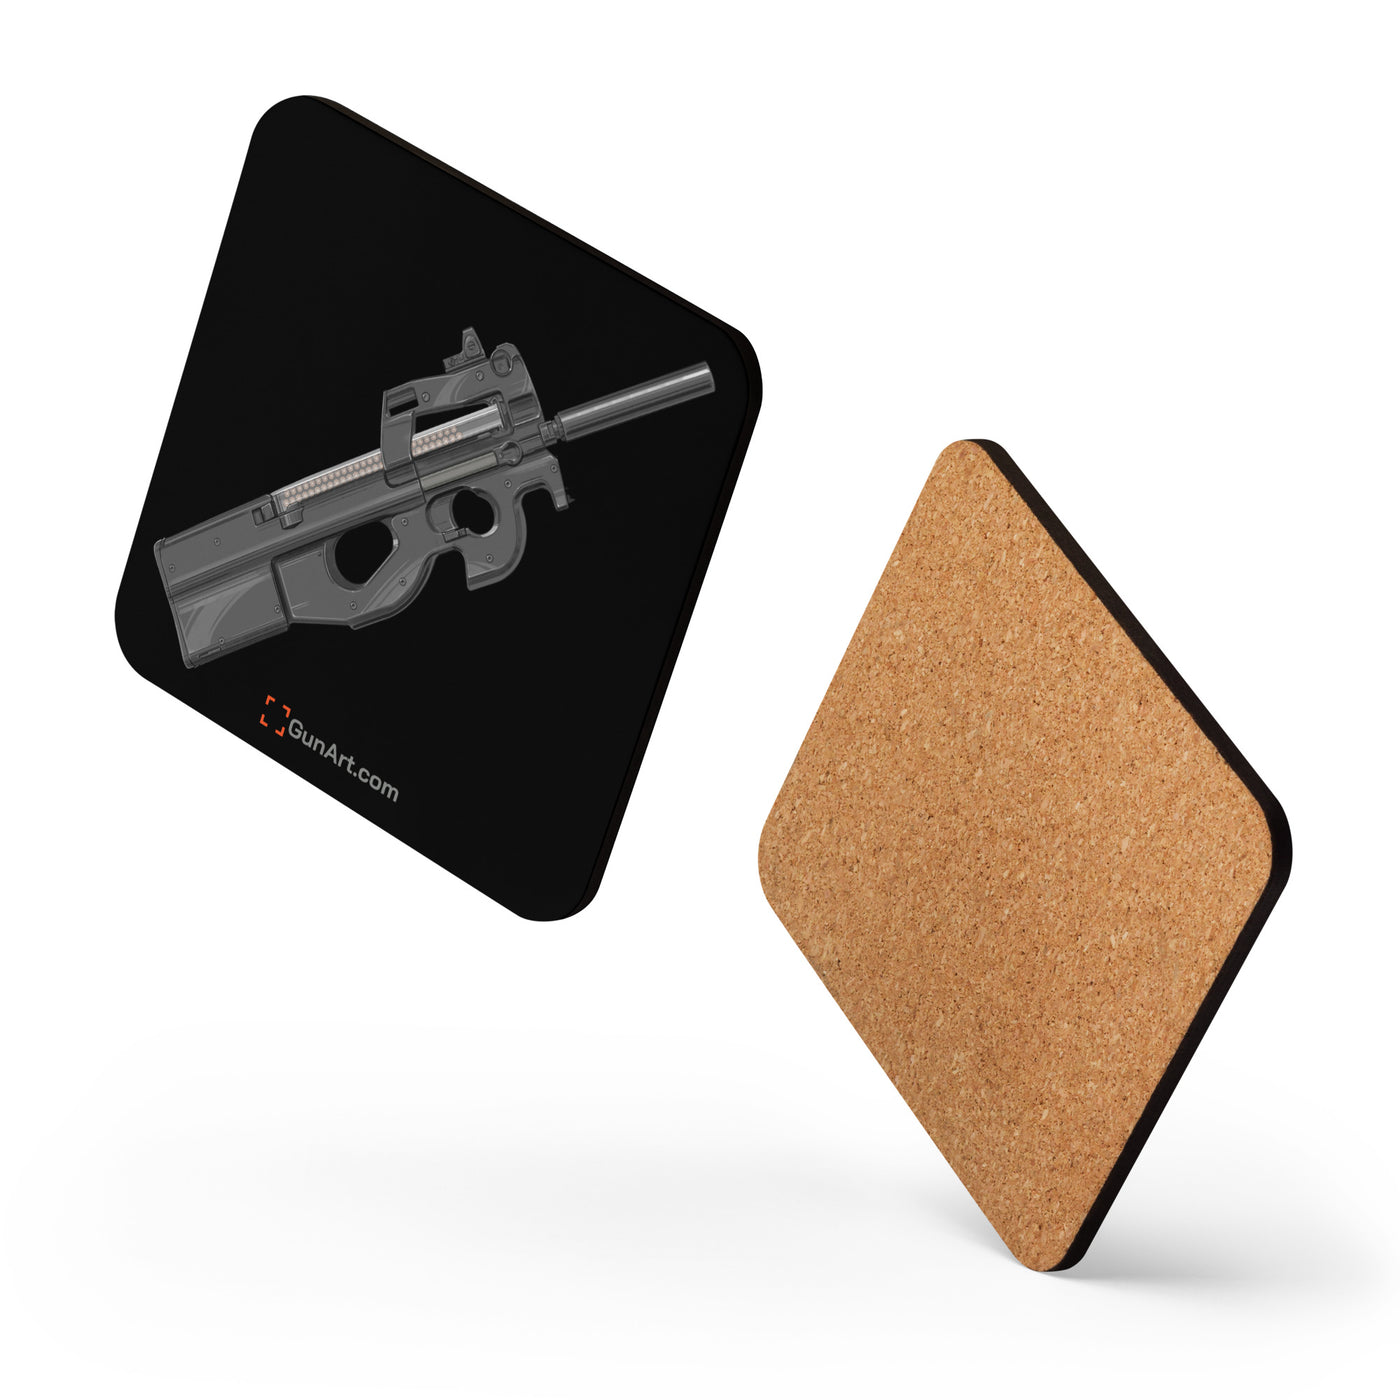 Secret Service Bullpup 5.7x28mm Subgun Cork-back Coaster - Just The Piece - Black Background